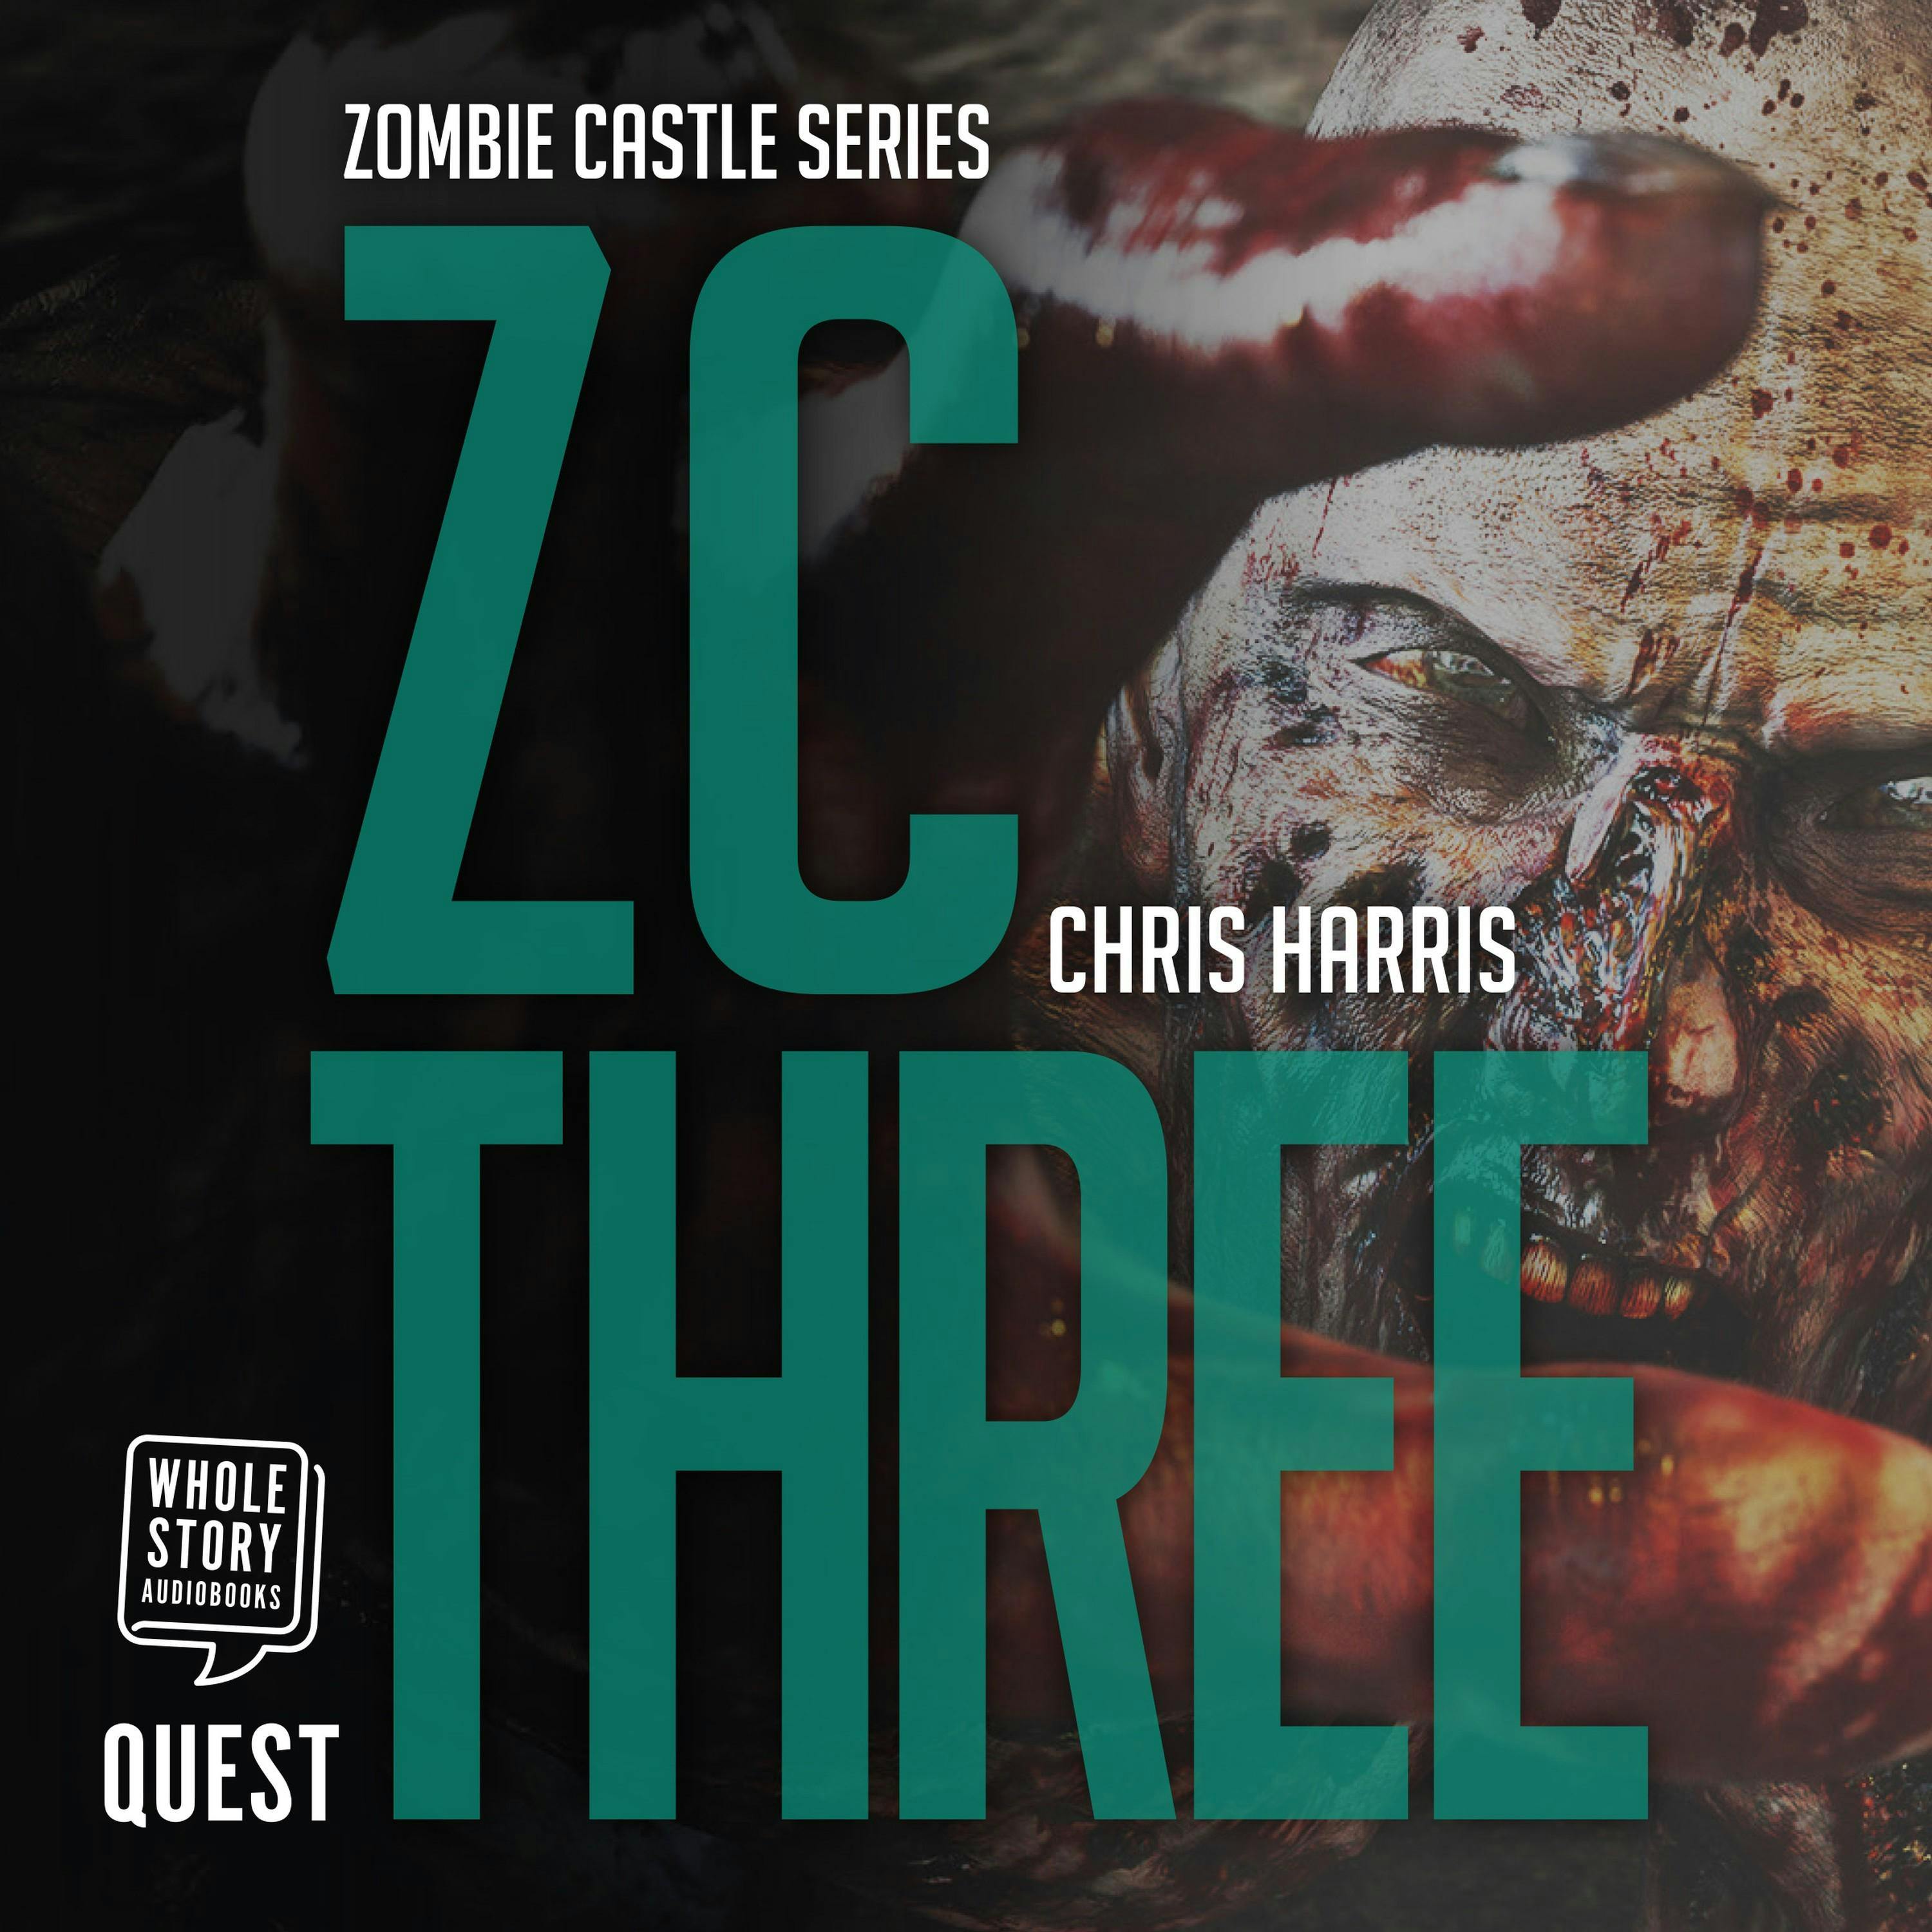 ZC Three: Zombie Castle Series - undefined